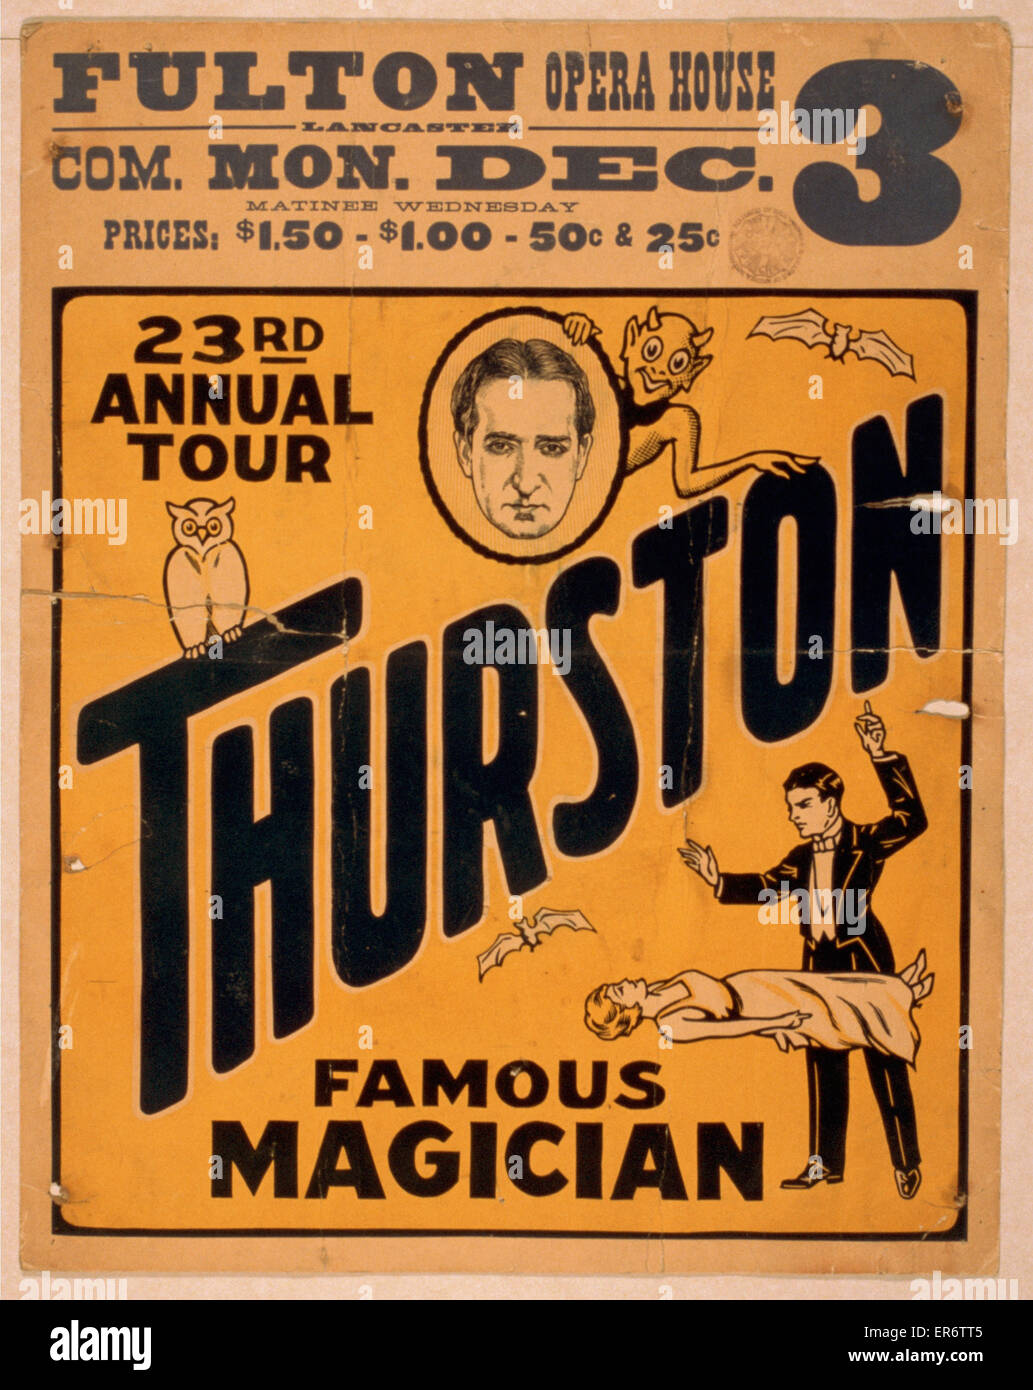 Thurston, famous magician 23rd annual tour Stock Photo